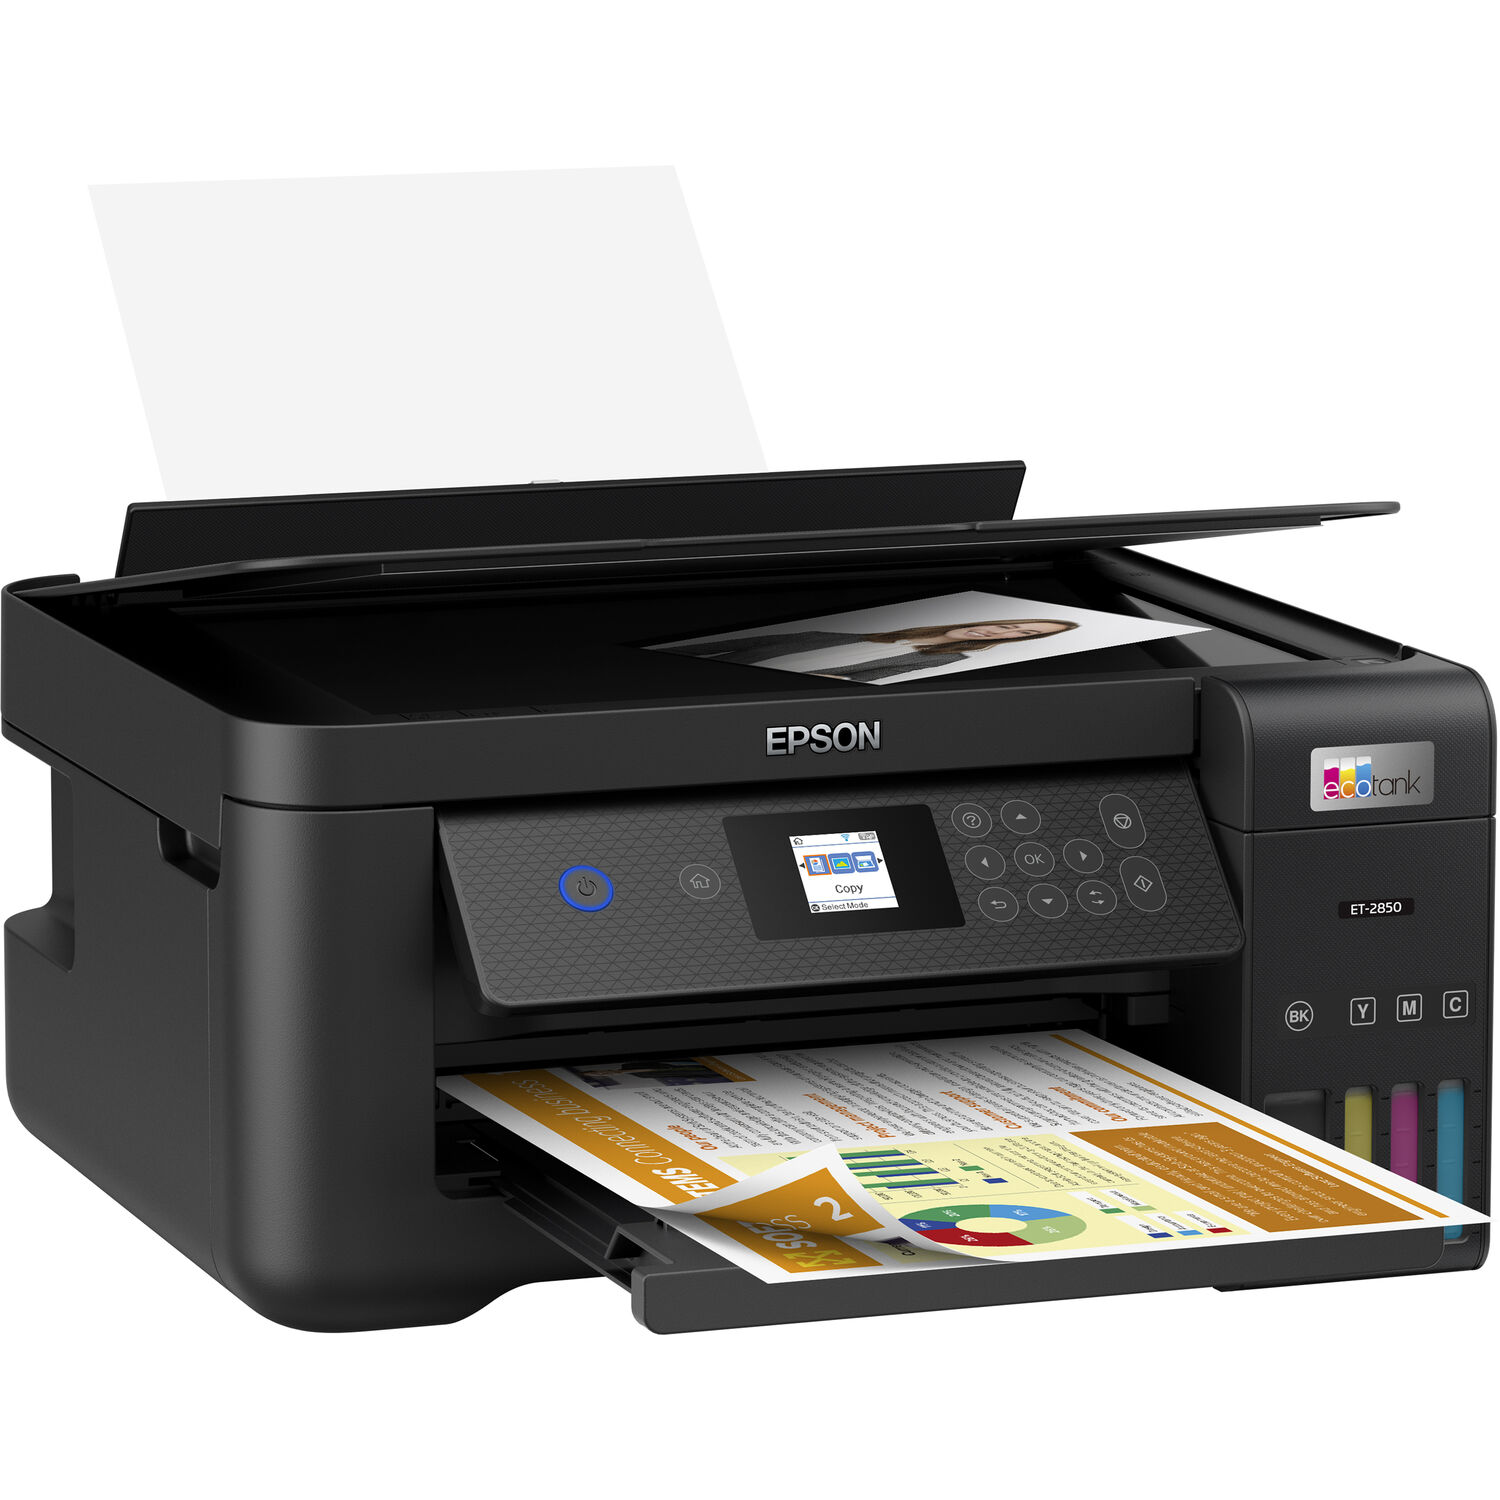 Impresora Multifuncional Tinta Continua Epson Ecotank Et 2850 Wireless Color sin Cartucho Negro